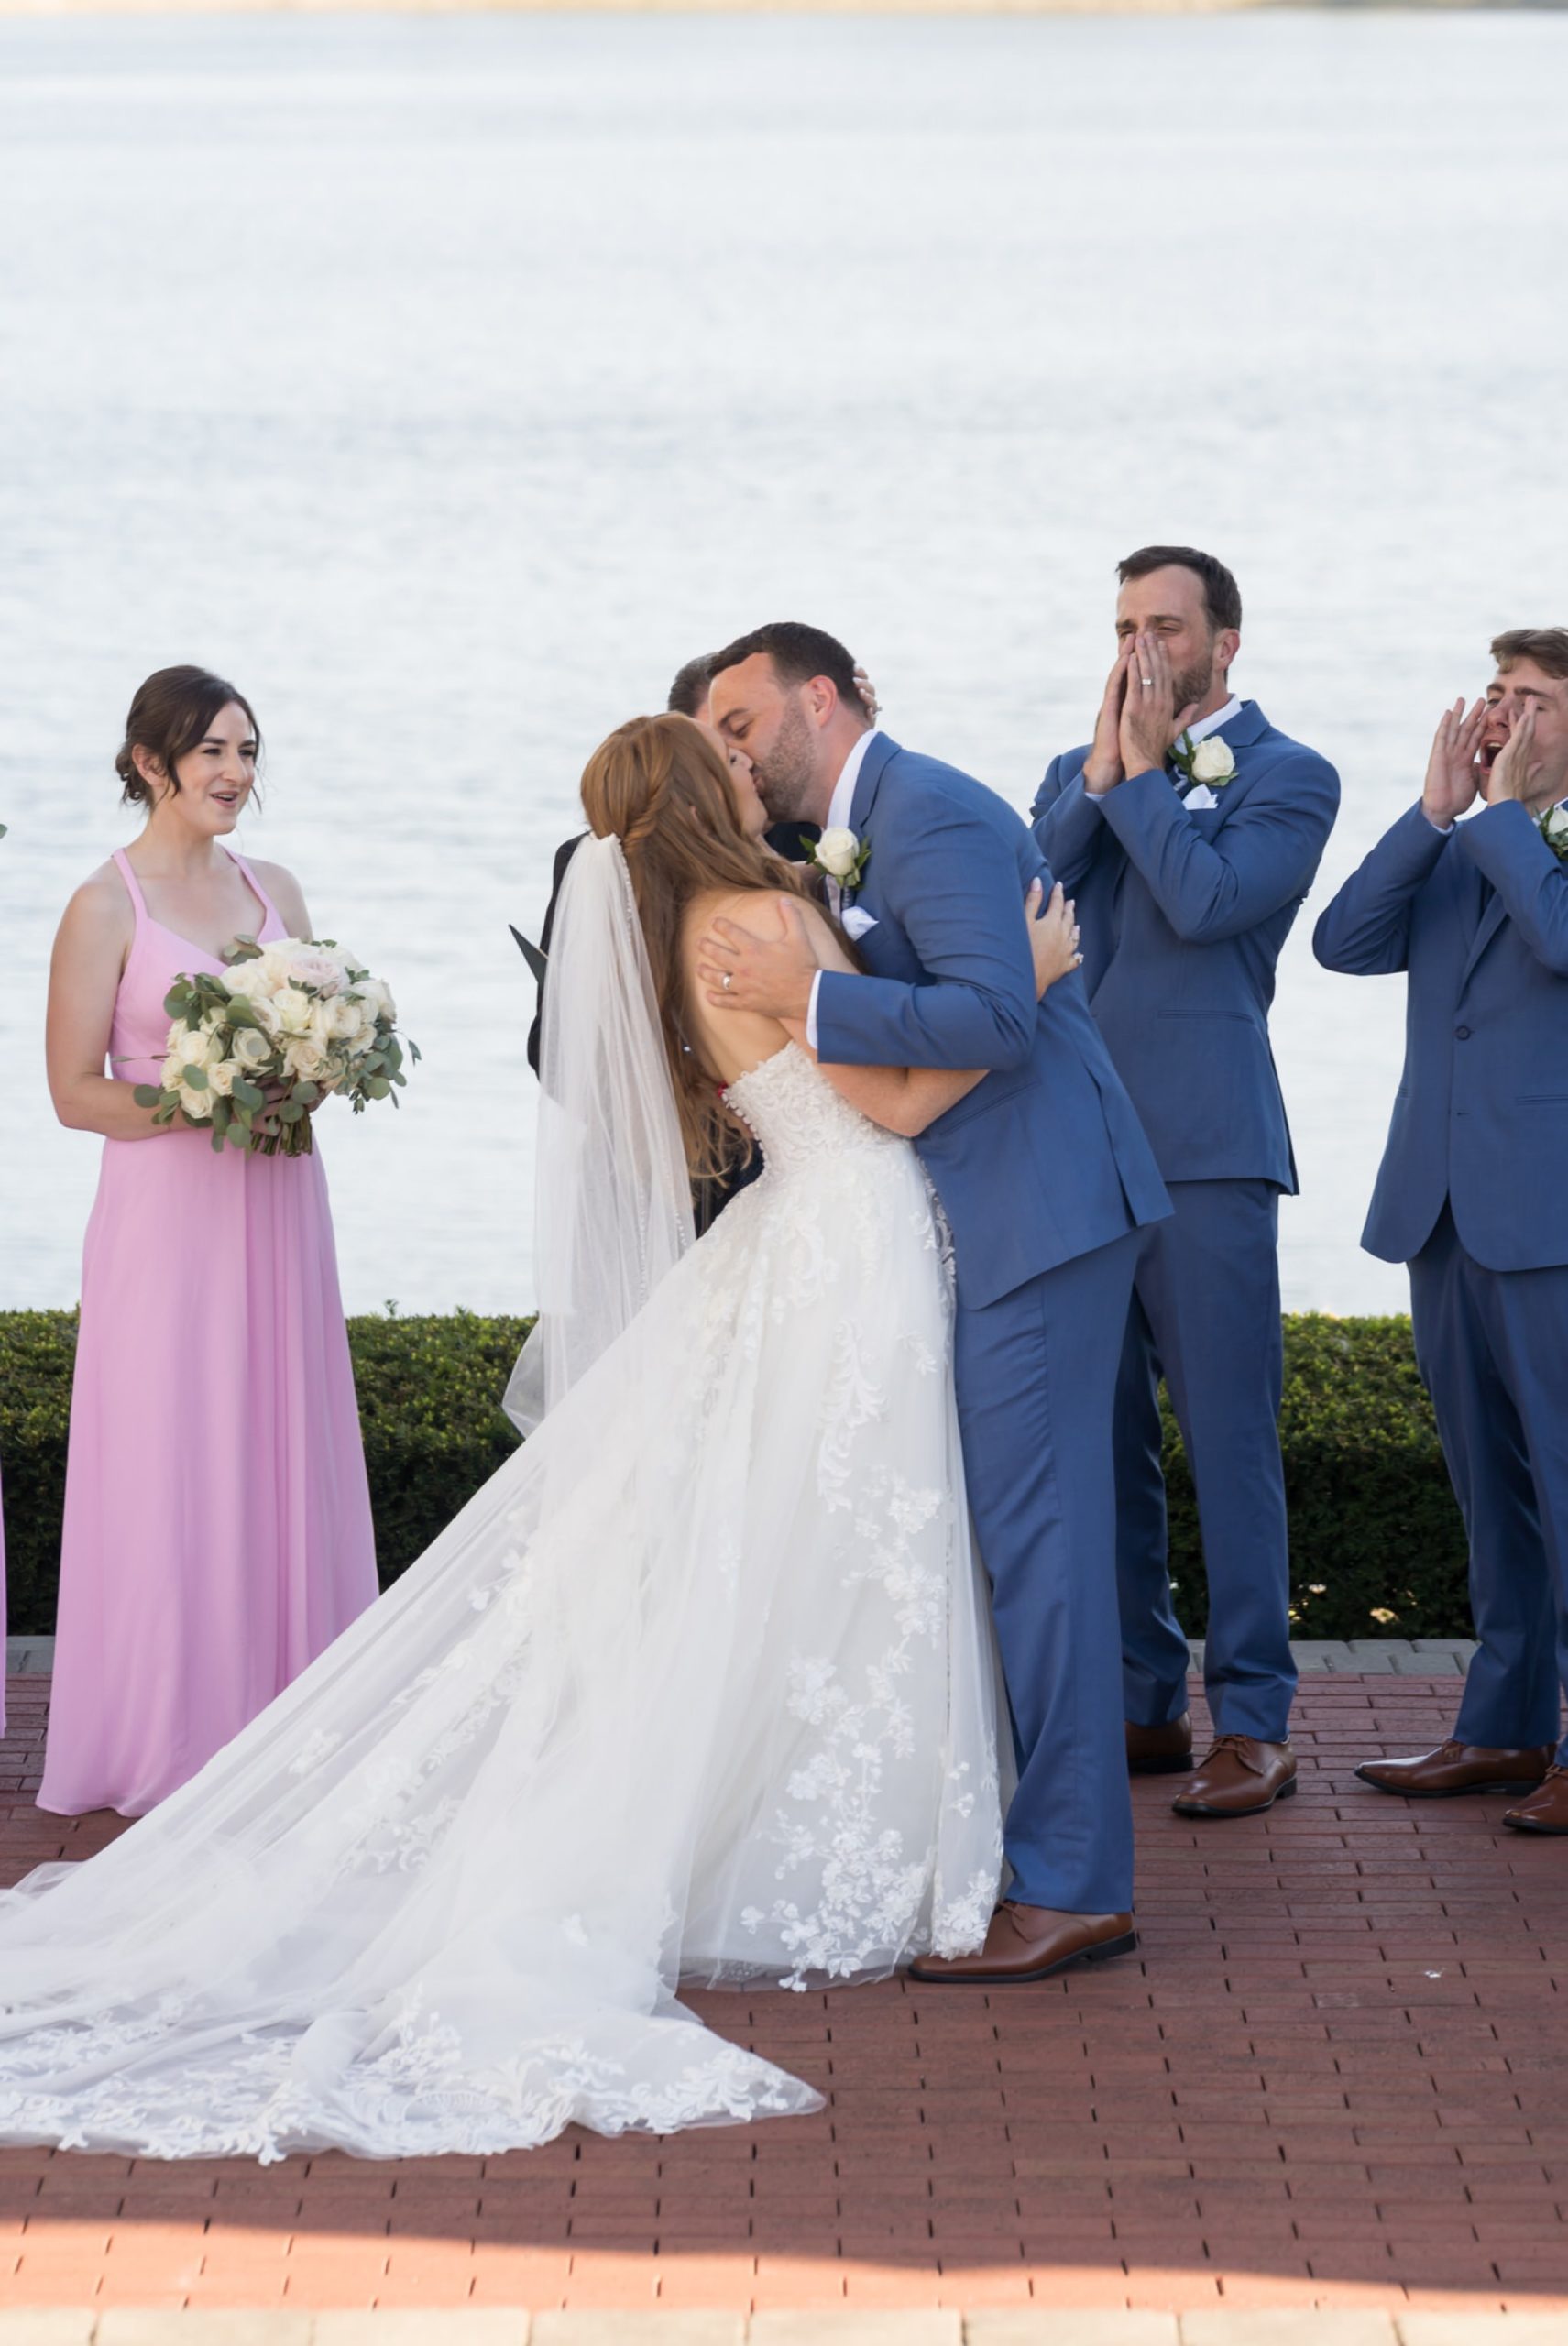 Justin and Sarah kiss by the lake at their Greystone Golf Club wedding in Washington, MI.  